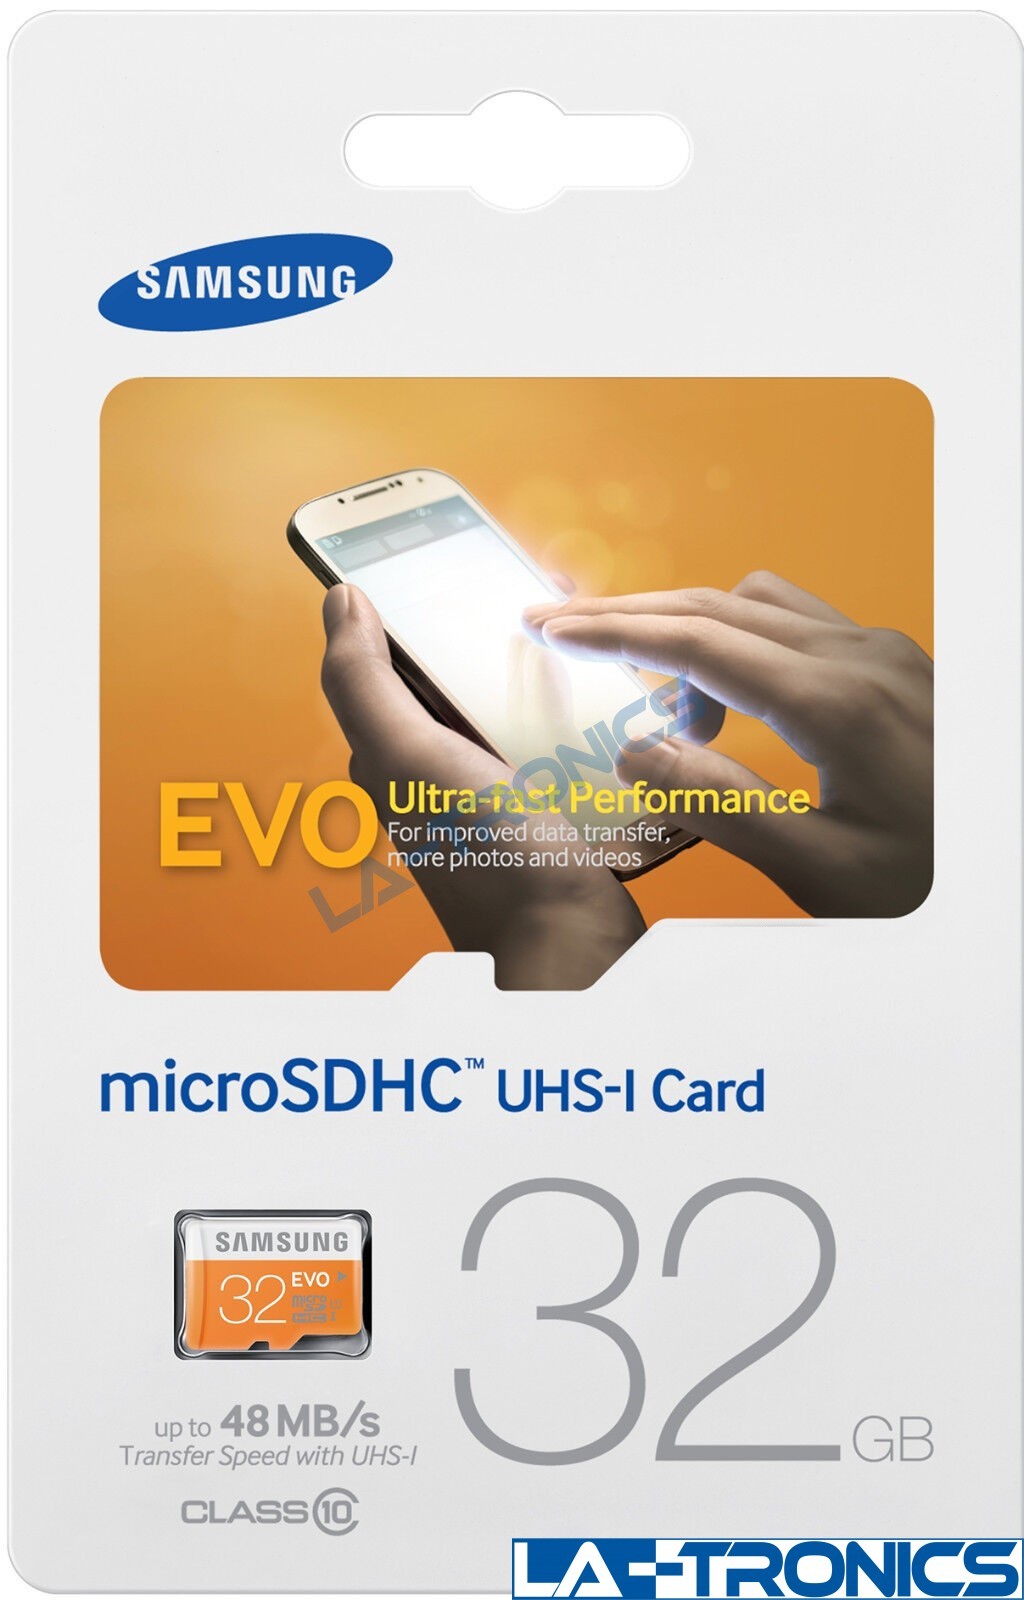 Samsung EVO 32GB MicroSDHC Micro SD SDHC UHS MicroSD For Galaxy S5 Class 10 Card